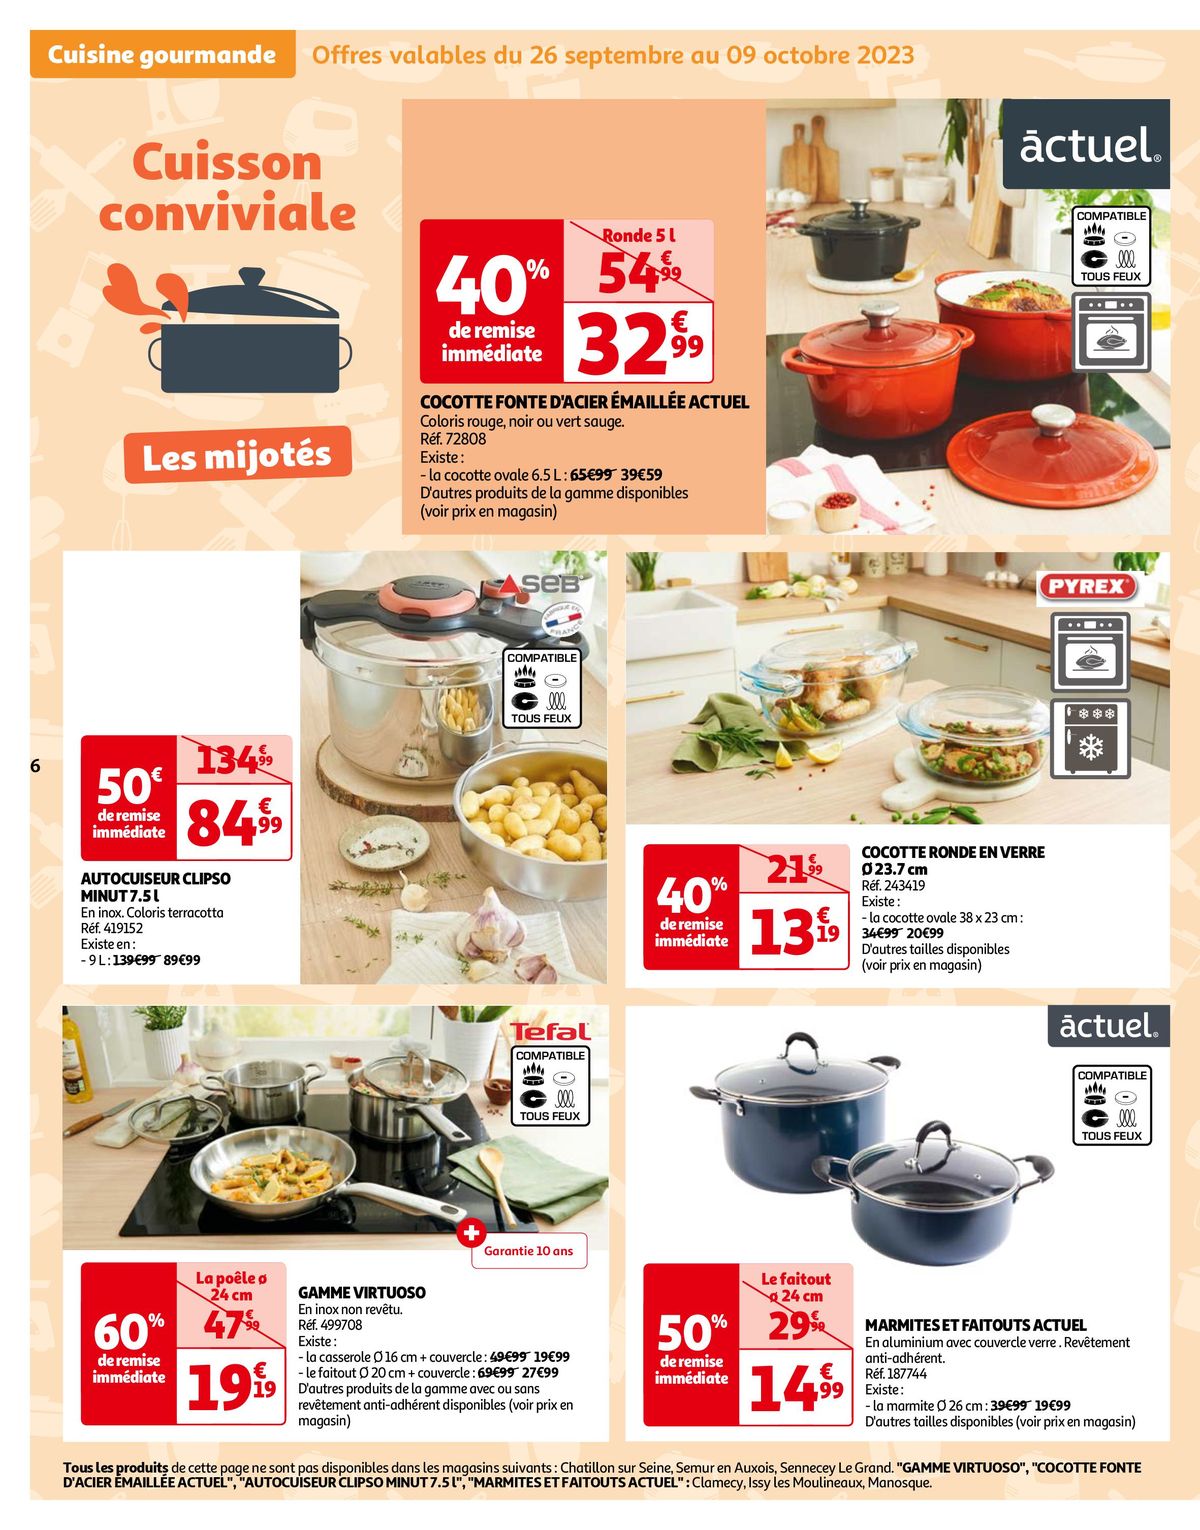 Catalogue Spécial Cuisine Gourmande, page 00006